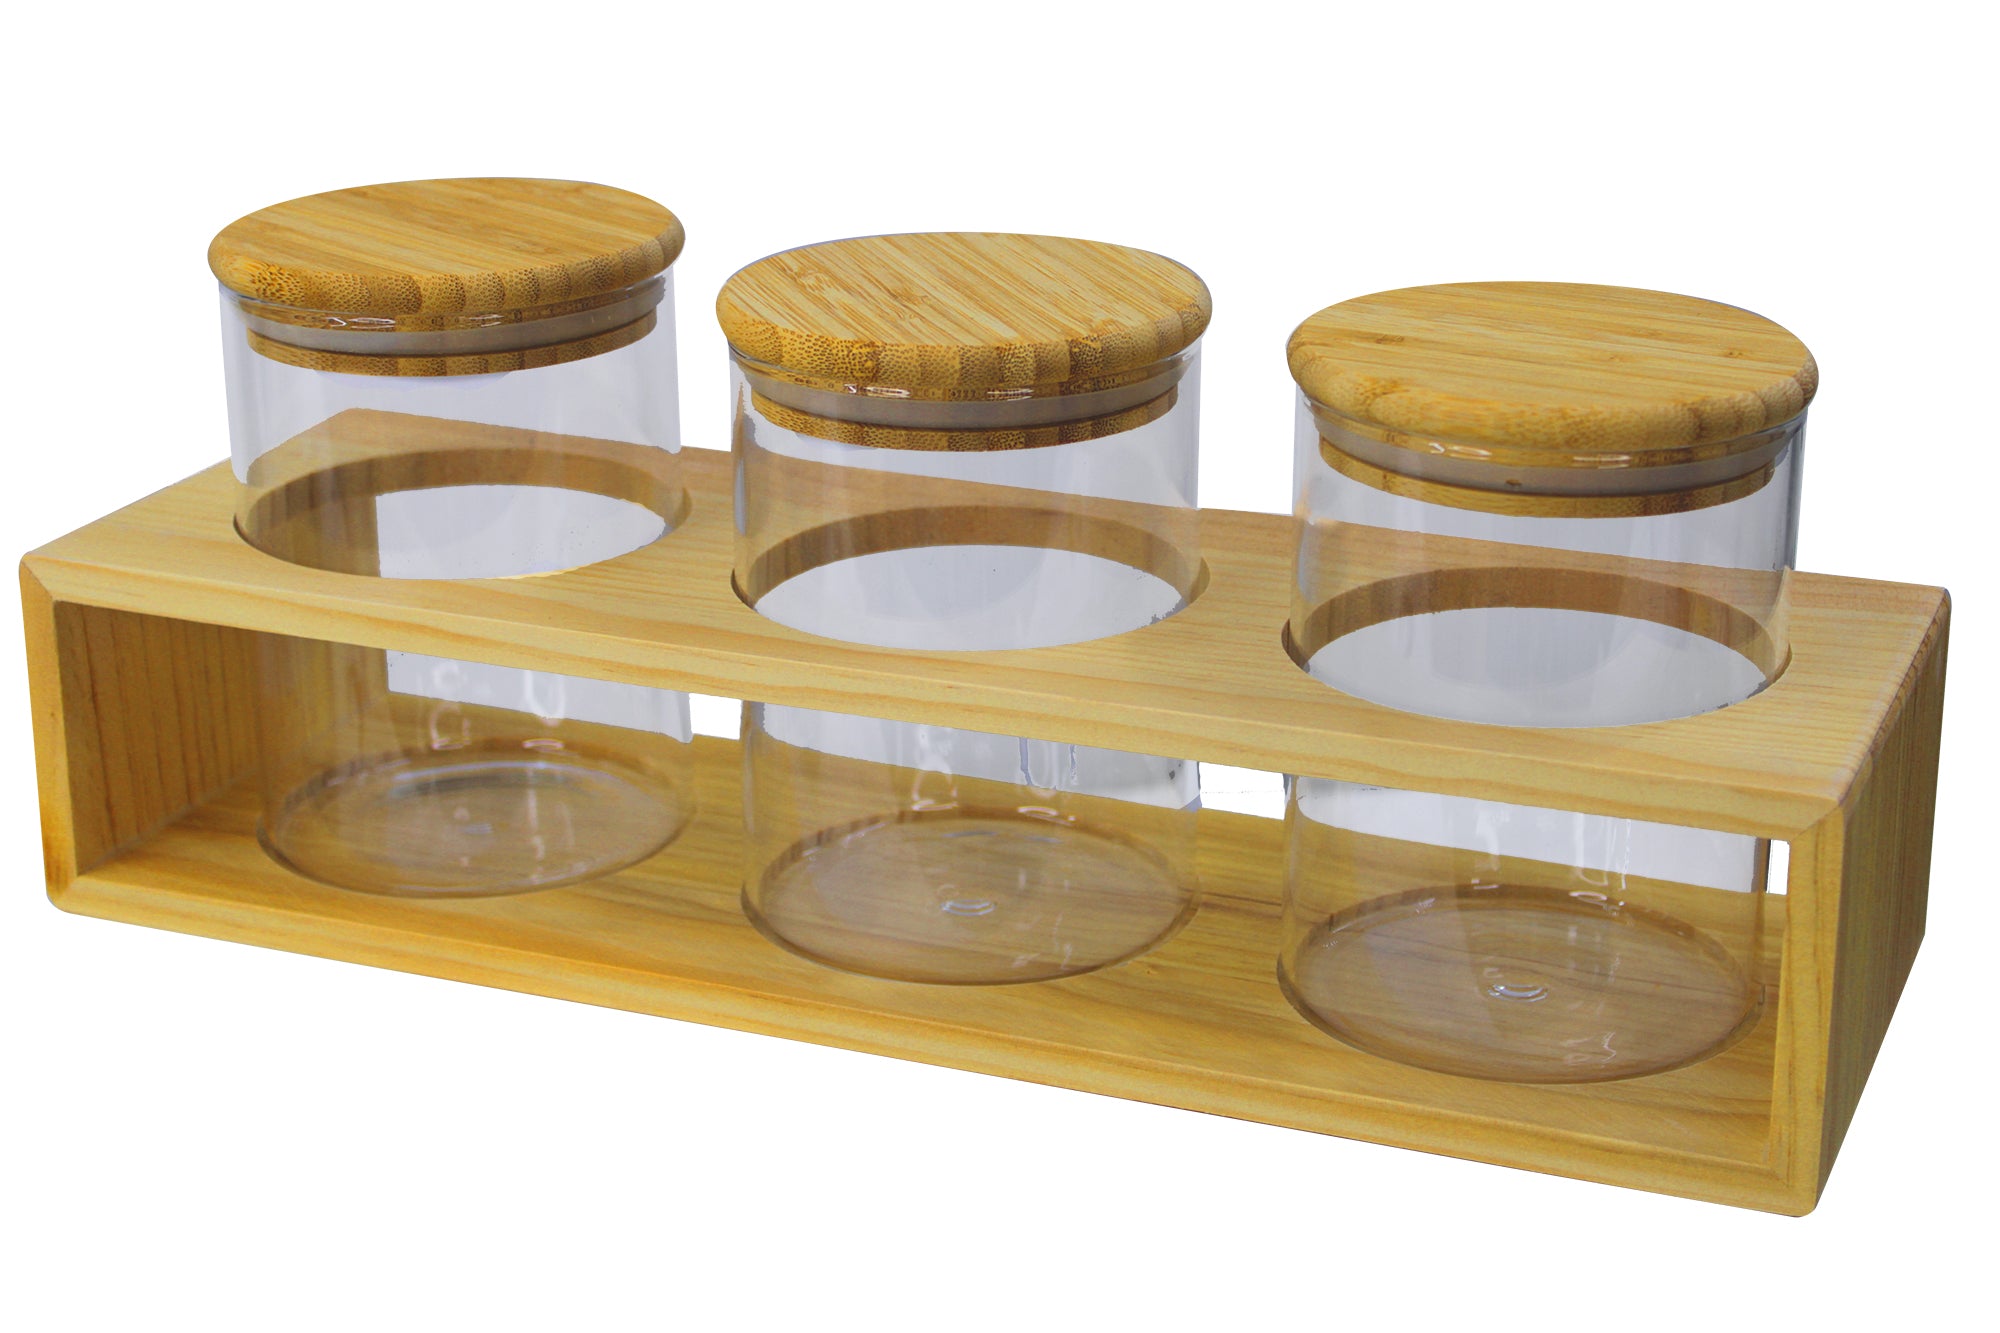 4 Piece 800ml Glass Jar Spice Set with Bamboo Lids & Wooden Holder - Round